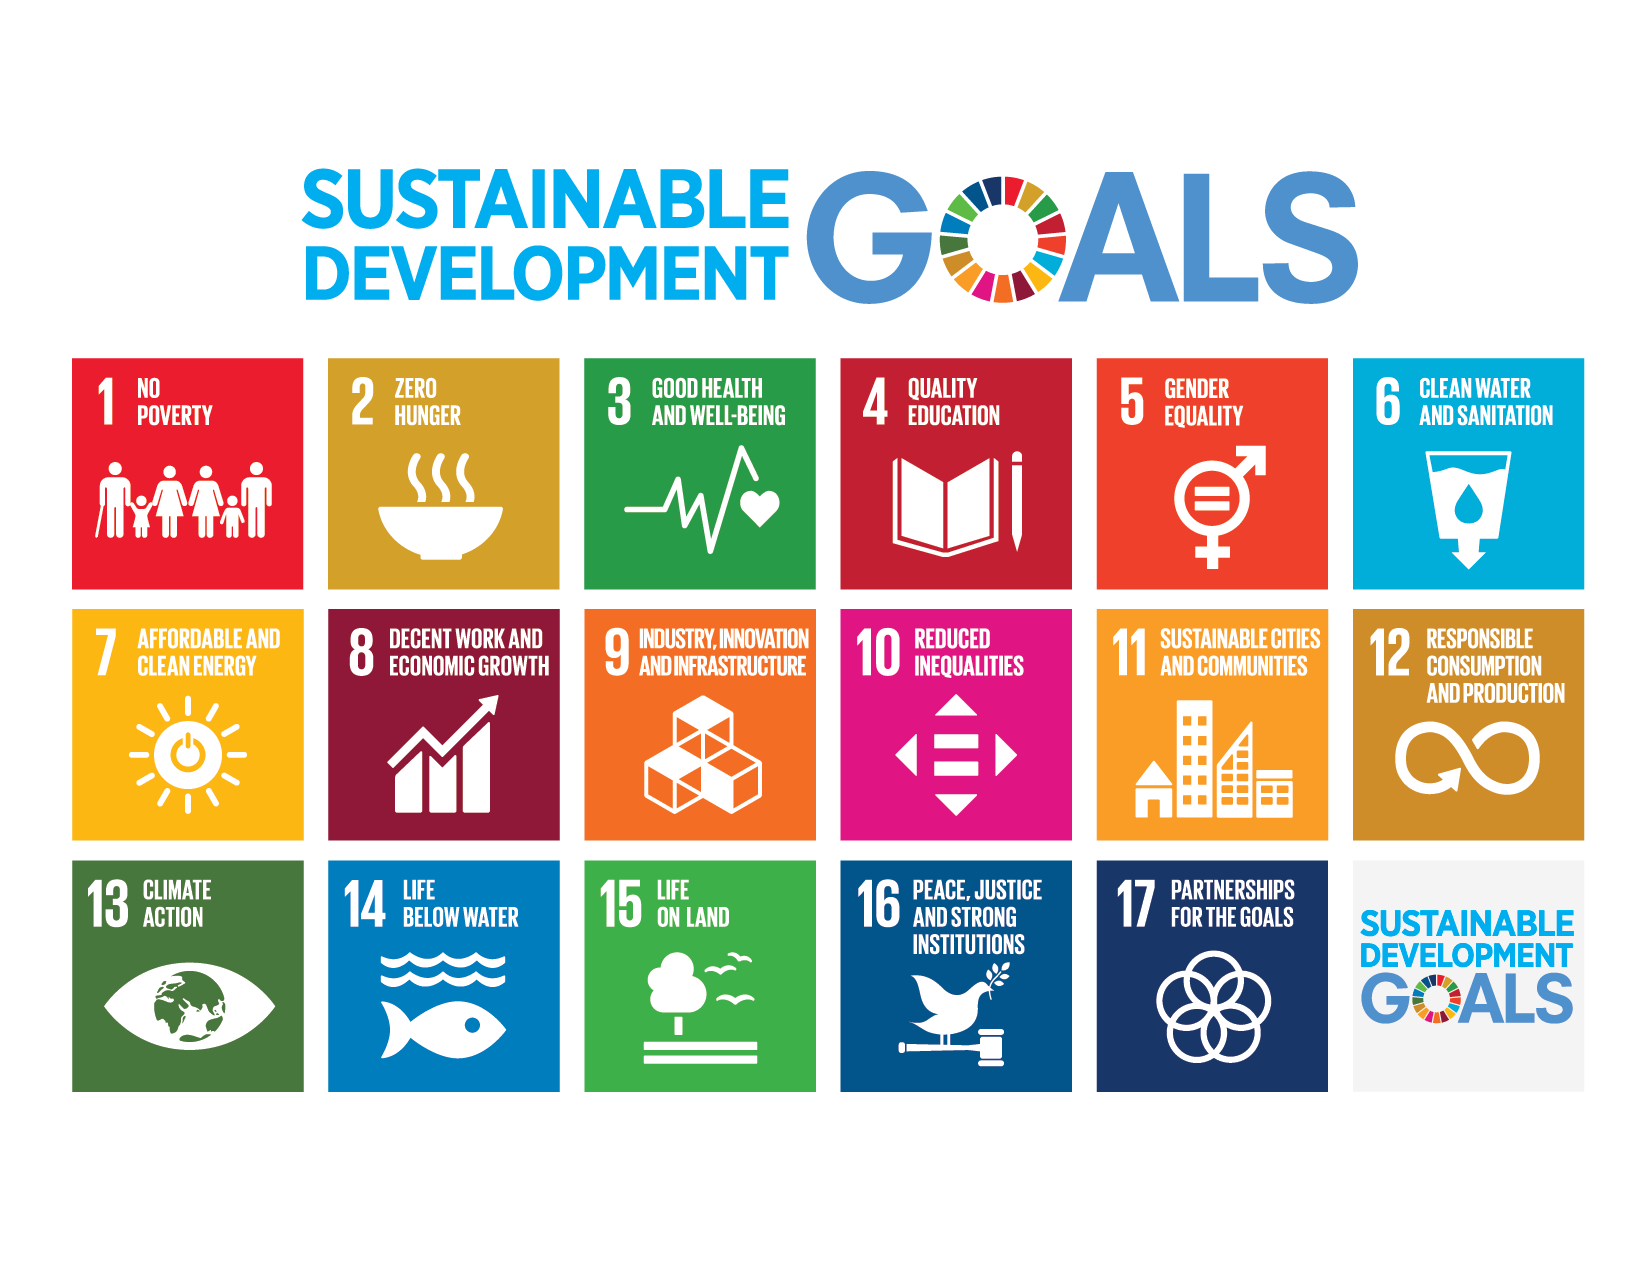 UN Sustainable Development Goals. Click to view text for full description.